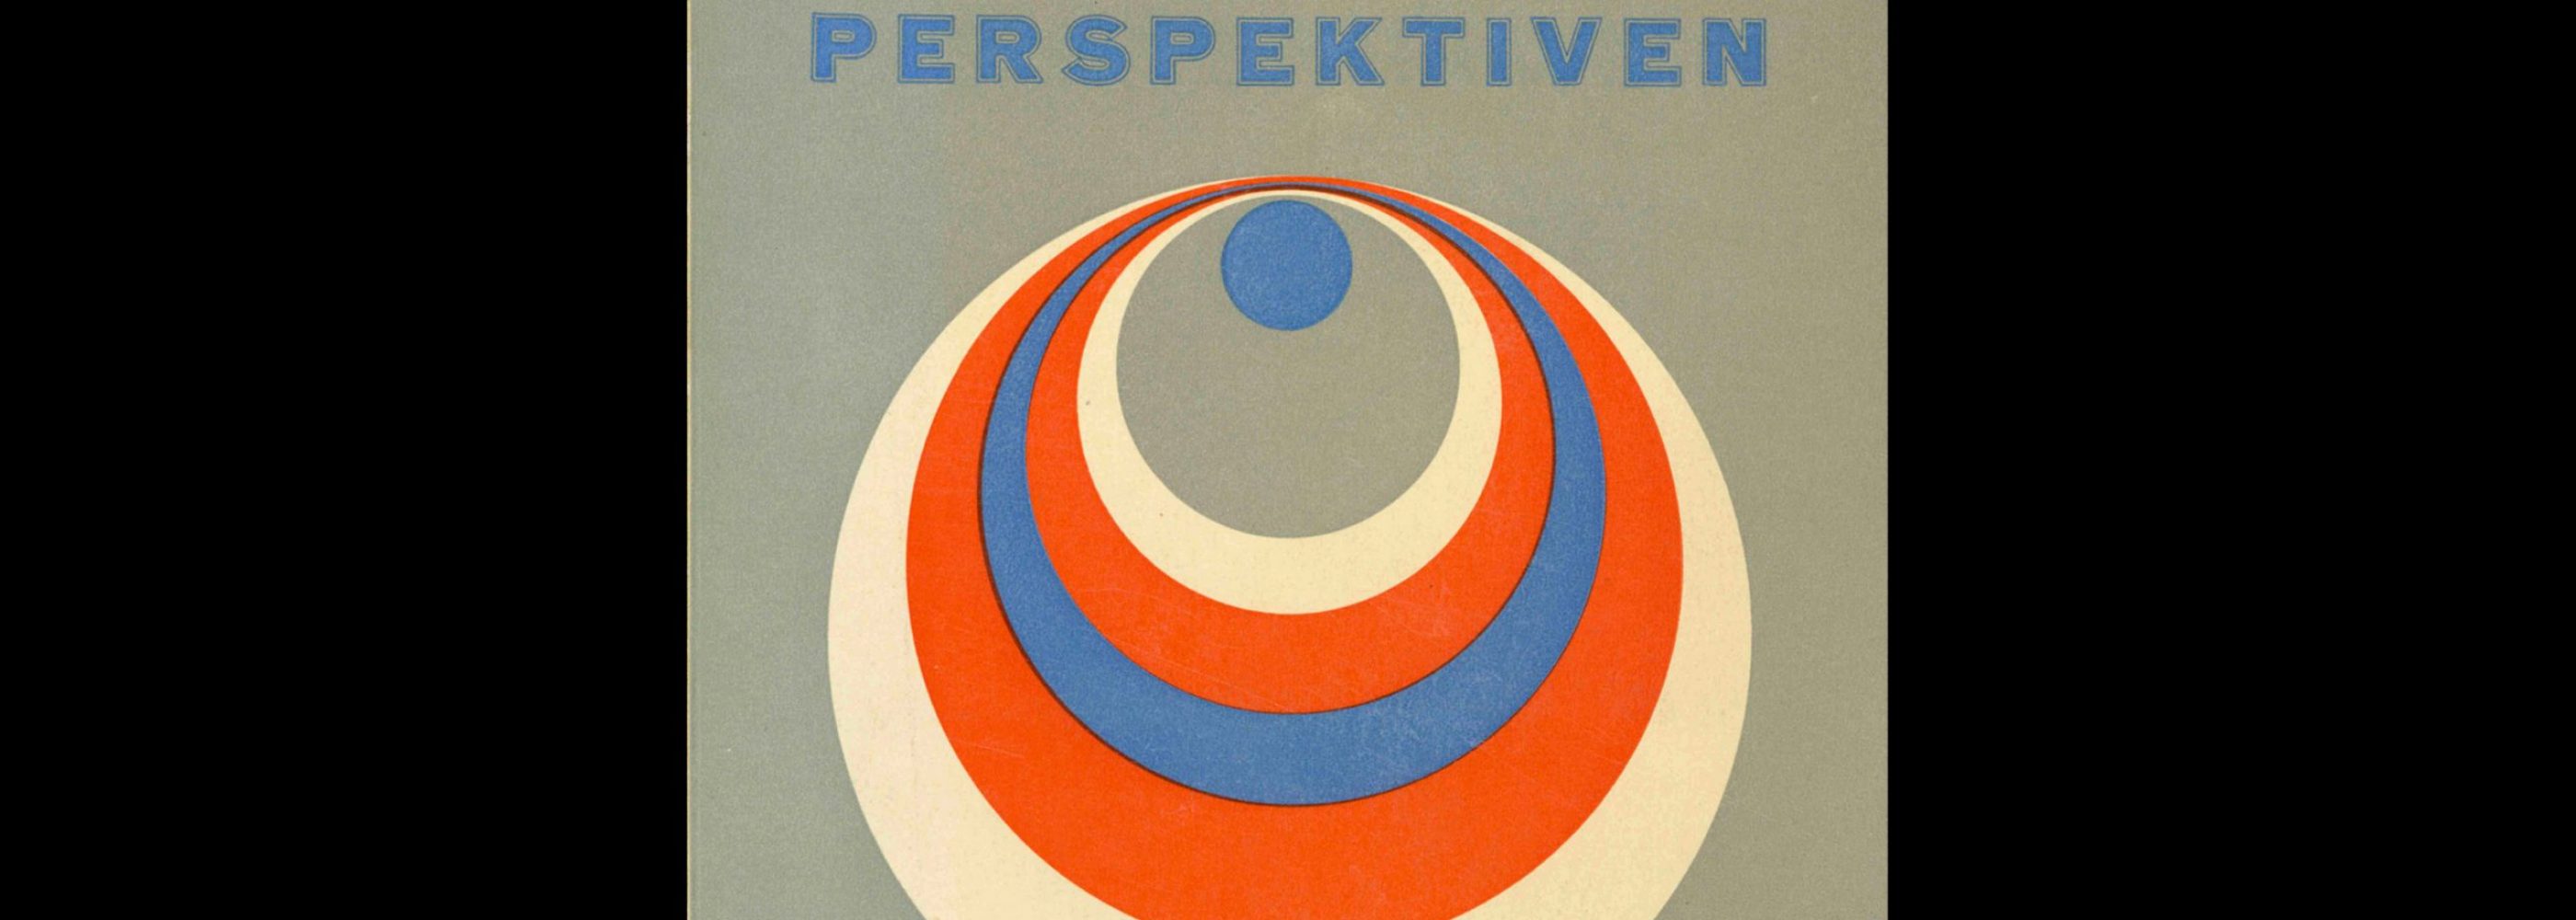 Perspektiven, Literatur, Kunst, Musik, 5, 1953. Cover design by Alvin Lustig